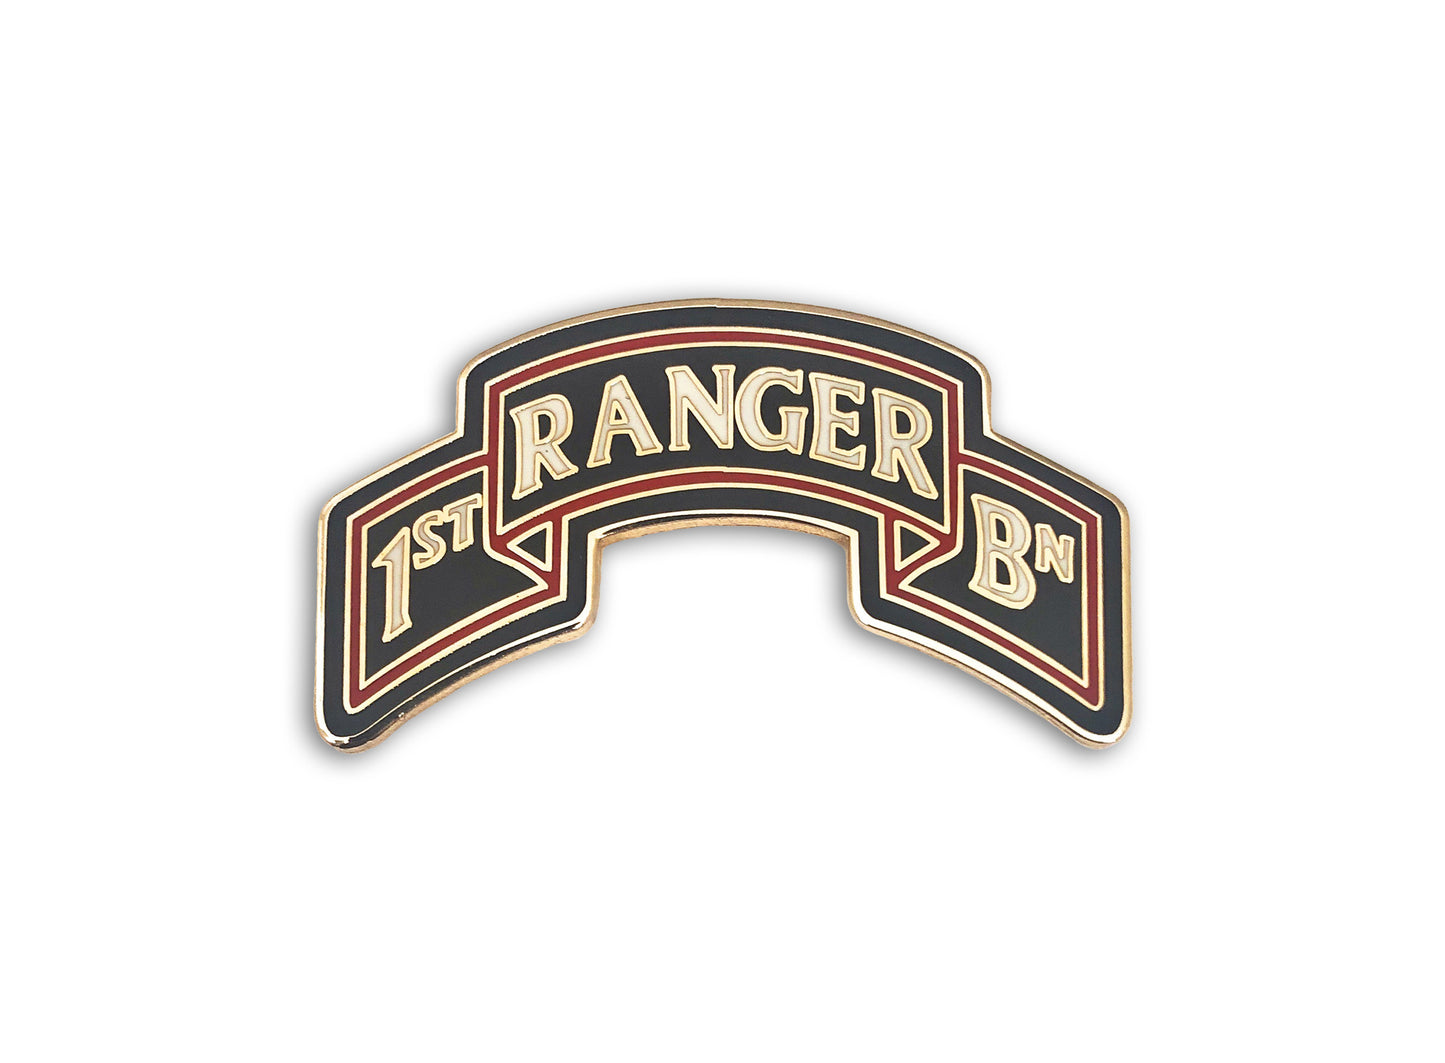 U.S. Army 75th Ranger Regiment 1St Battalion Scroll CSIB